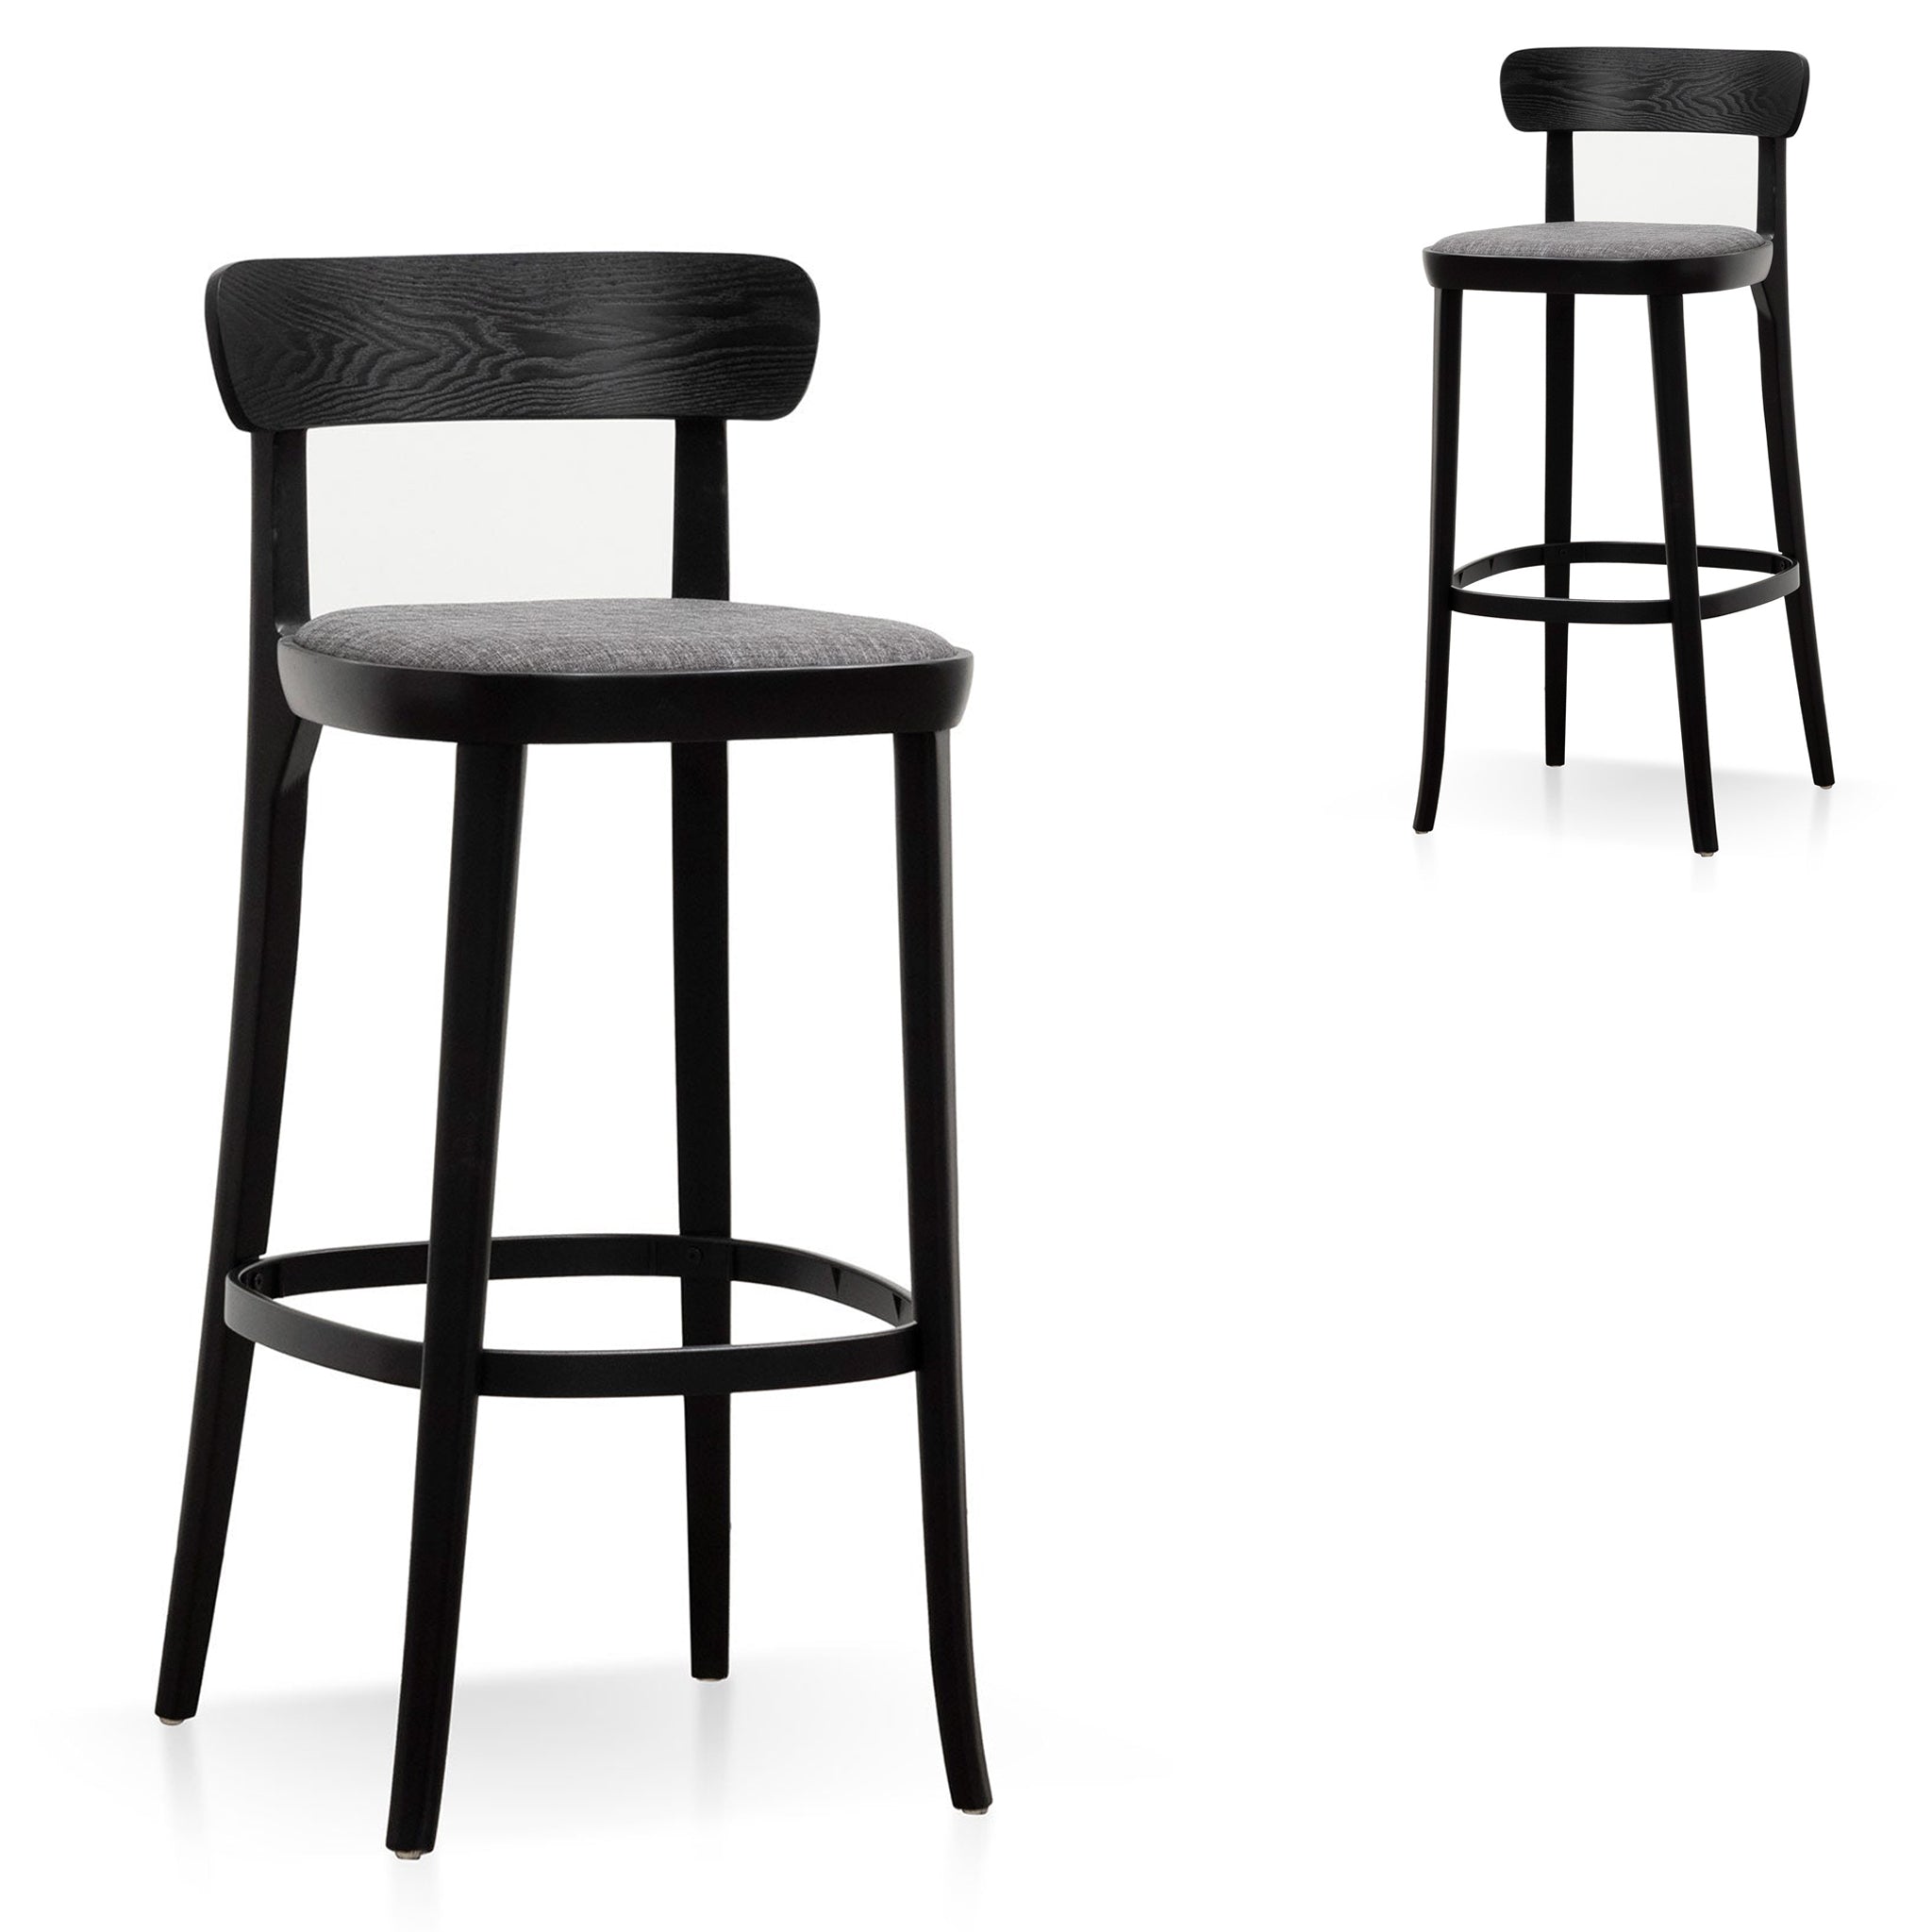 Josue 65cm Fabric Bar Stool - Black with Pepper Grey Seat (Set of 2)